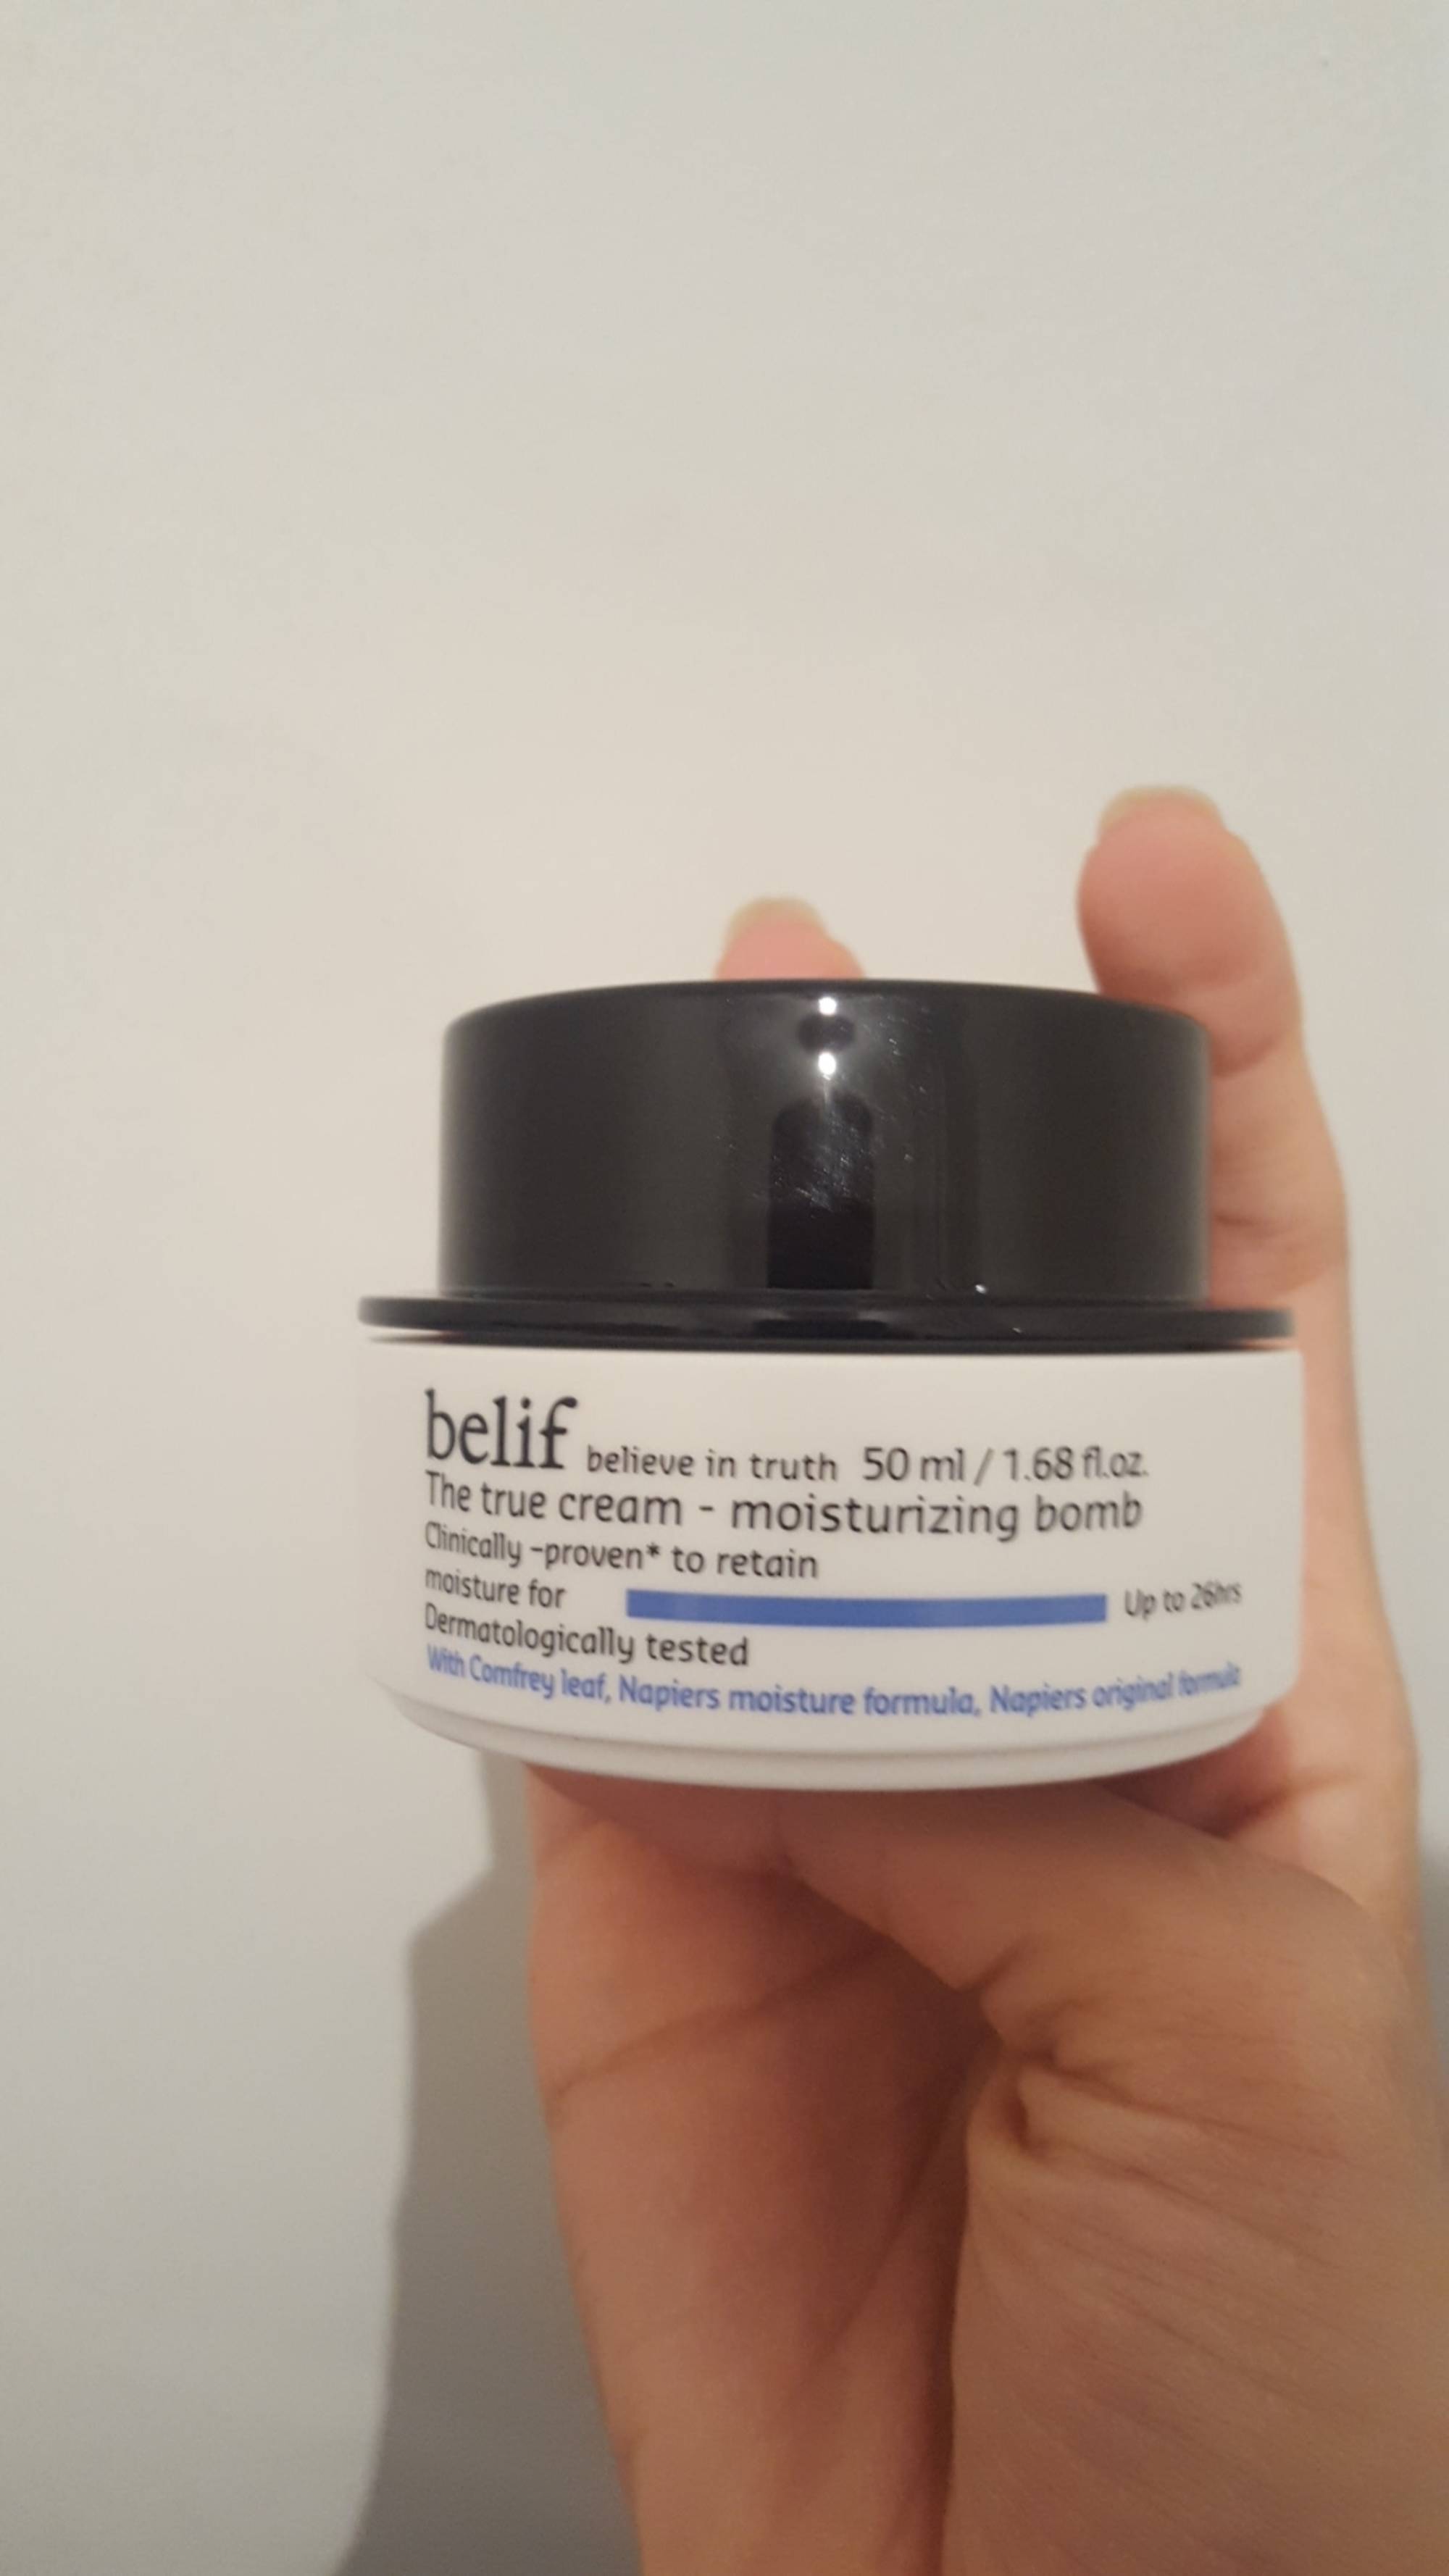 BELIF - The true cream moisturizing bomb